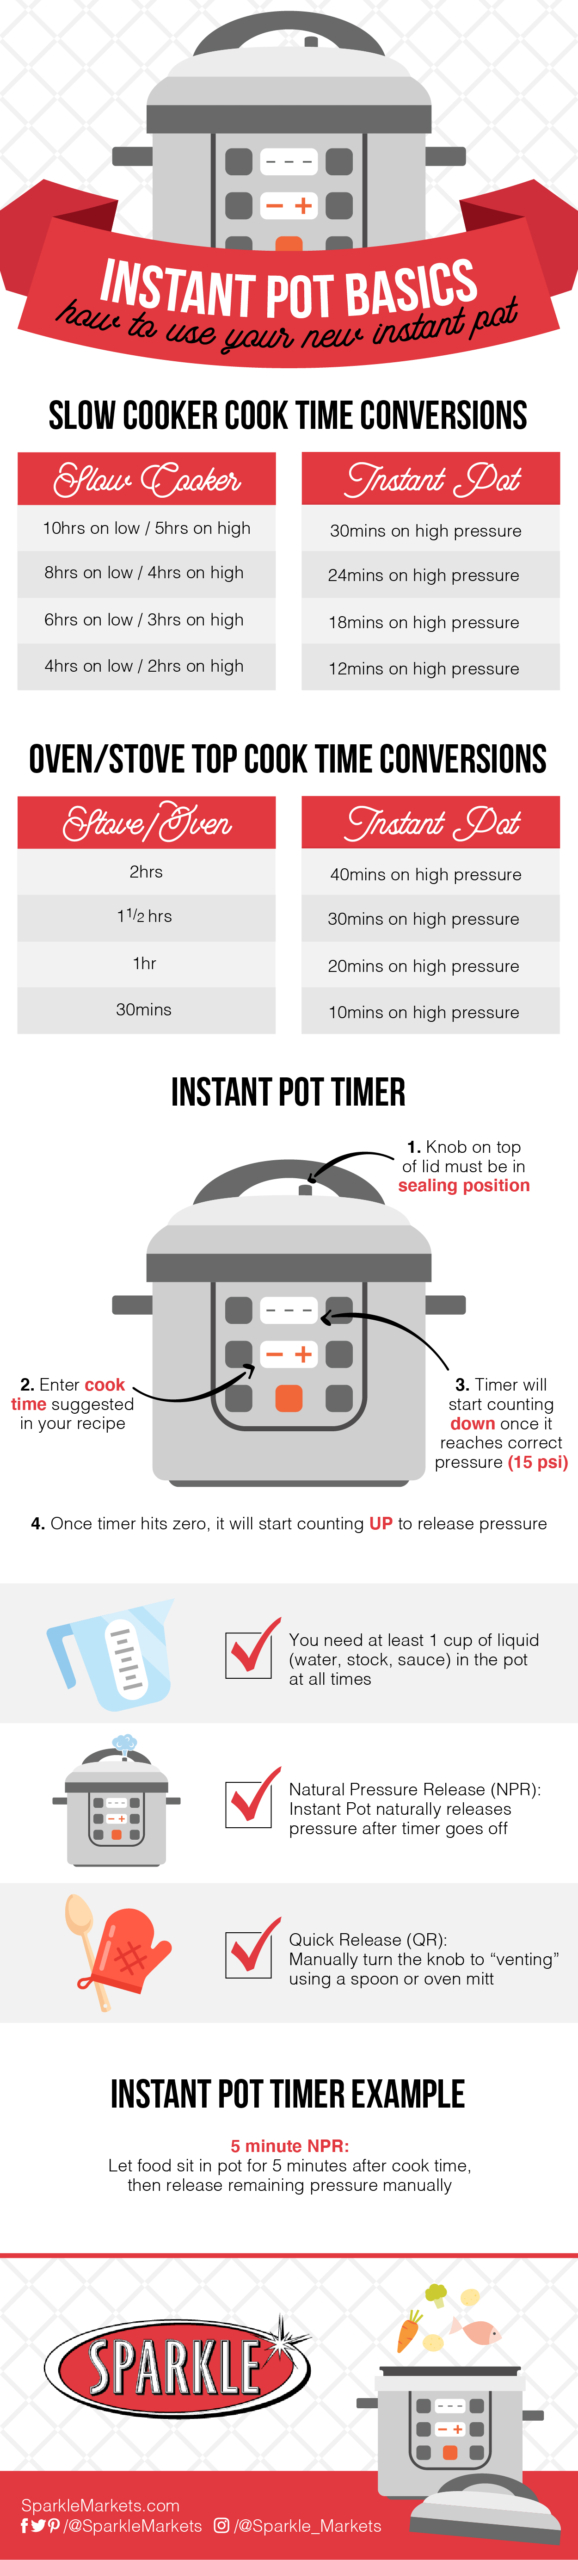 instant pot basics